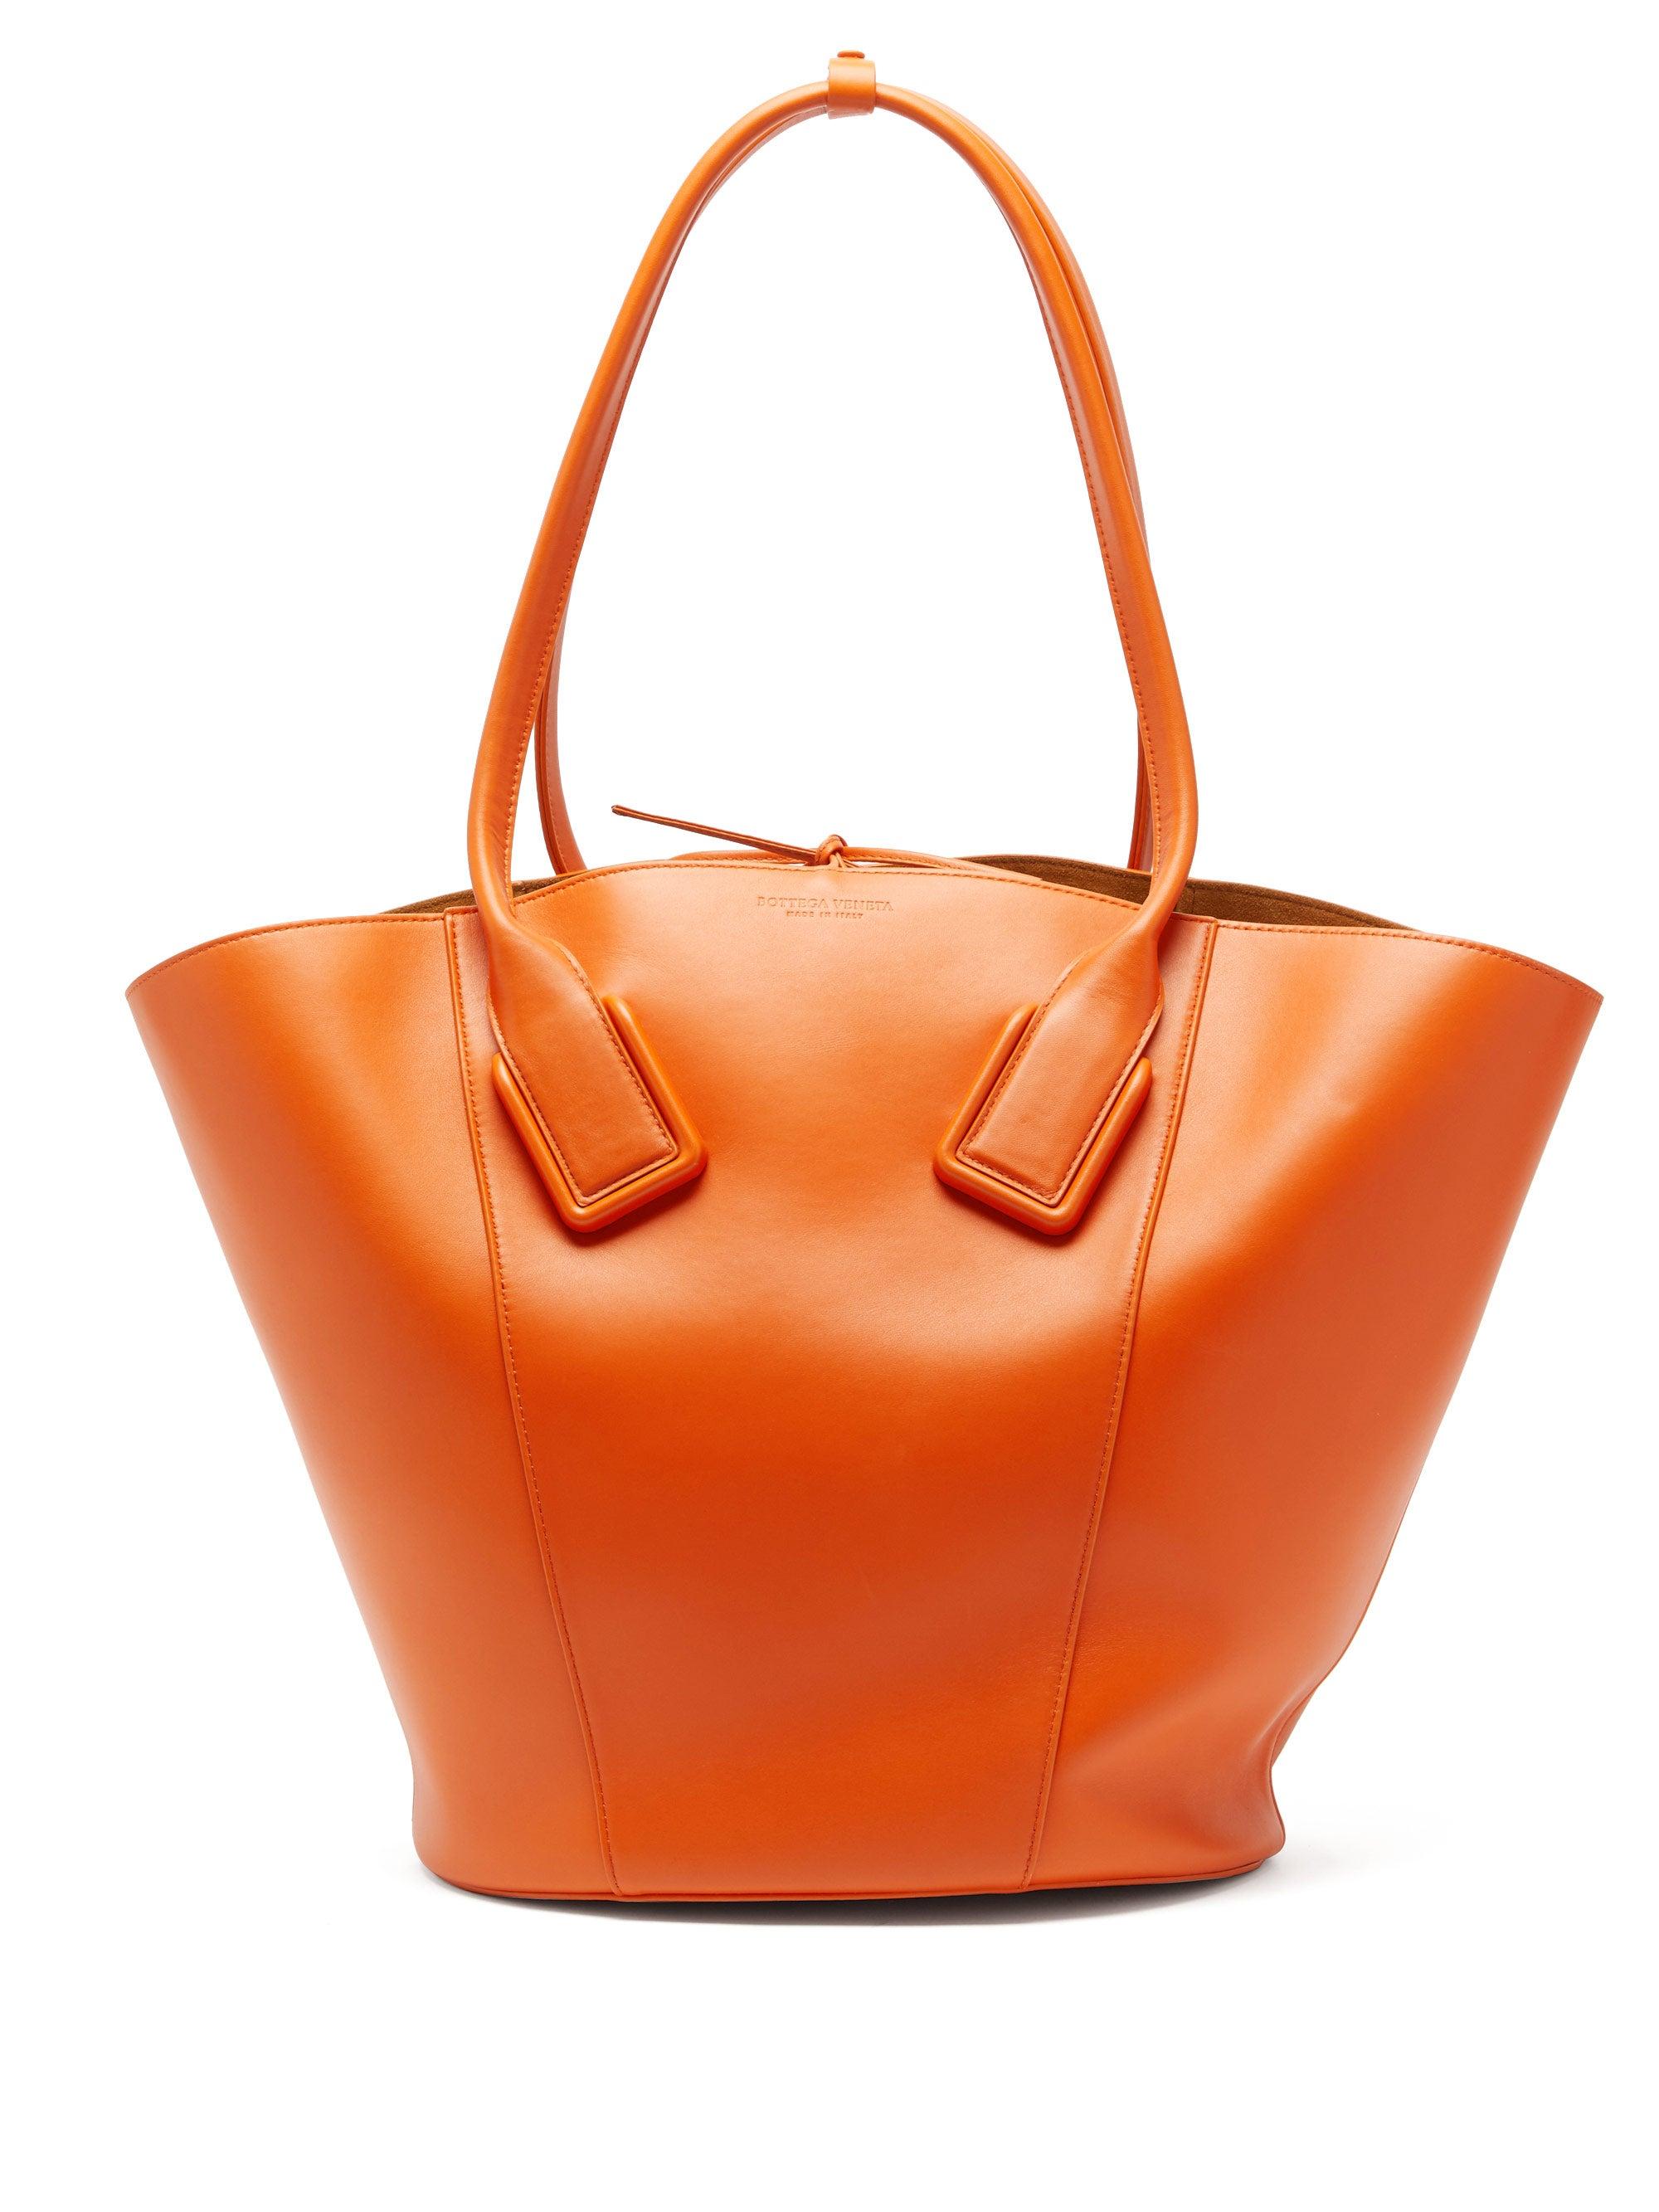 Bottega Veneta - Authenticated Tambura Handbag - Leather Orange Plain for Women, Good Condition